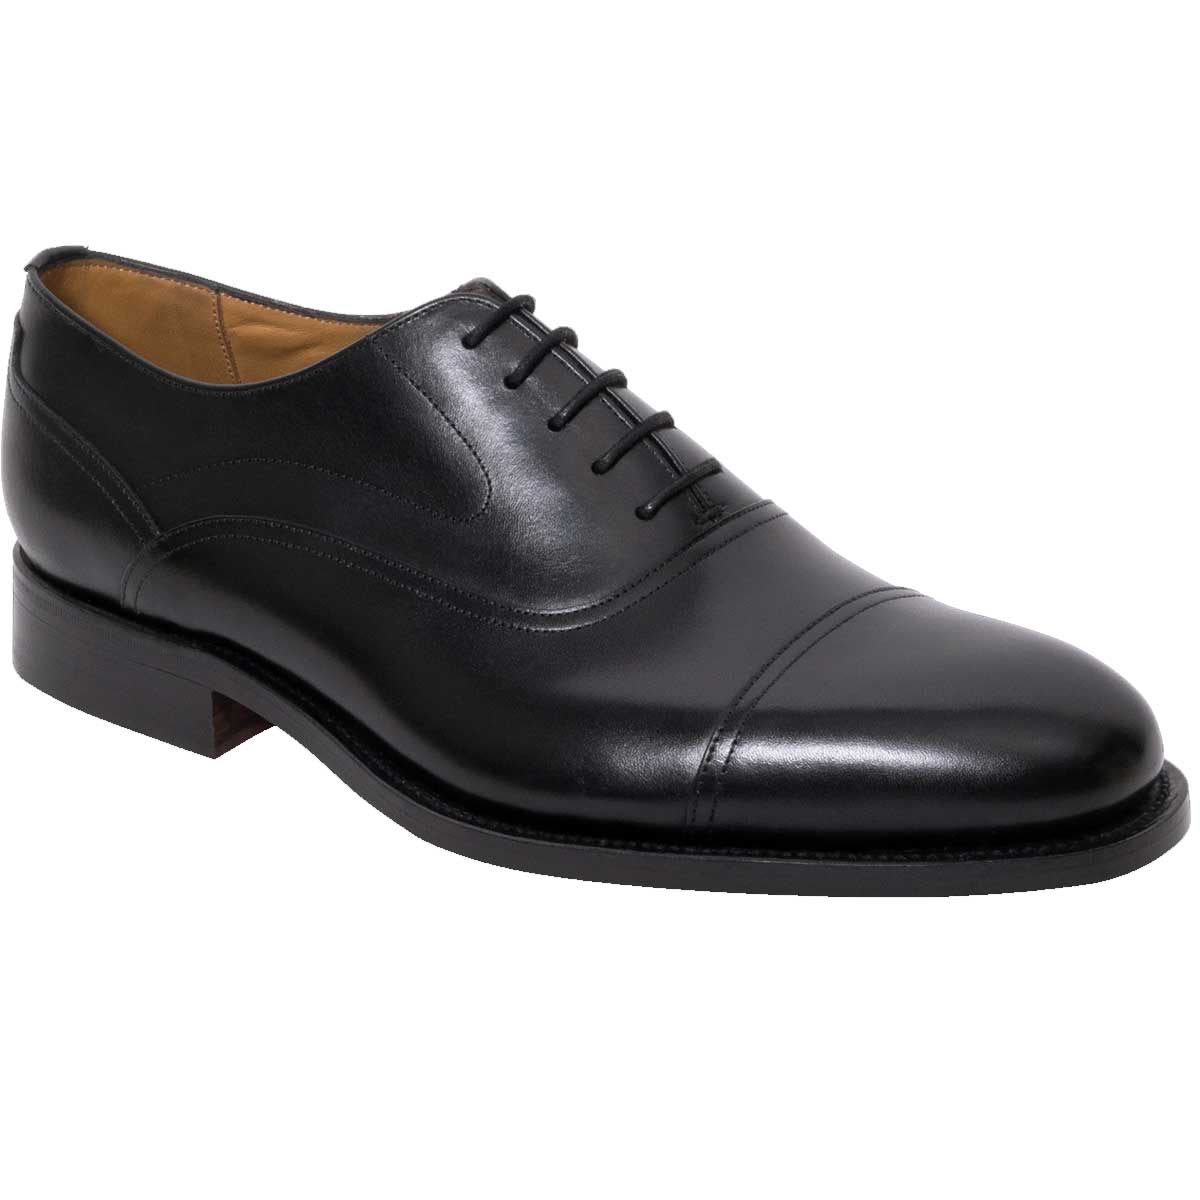 BARKER Cherwell Shoes - Mens - Black Calf